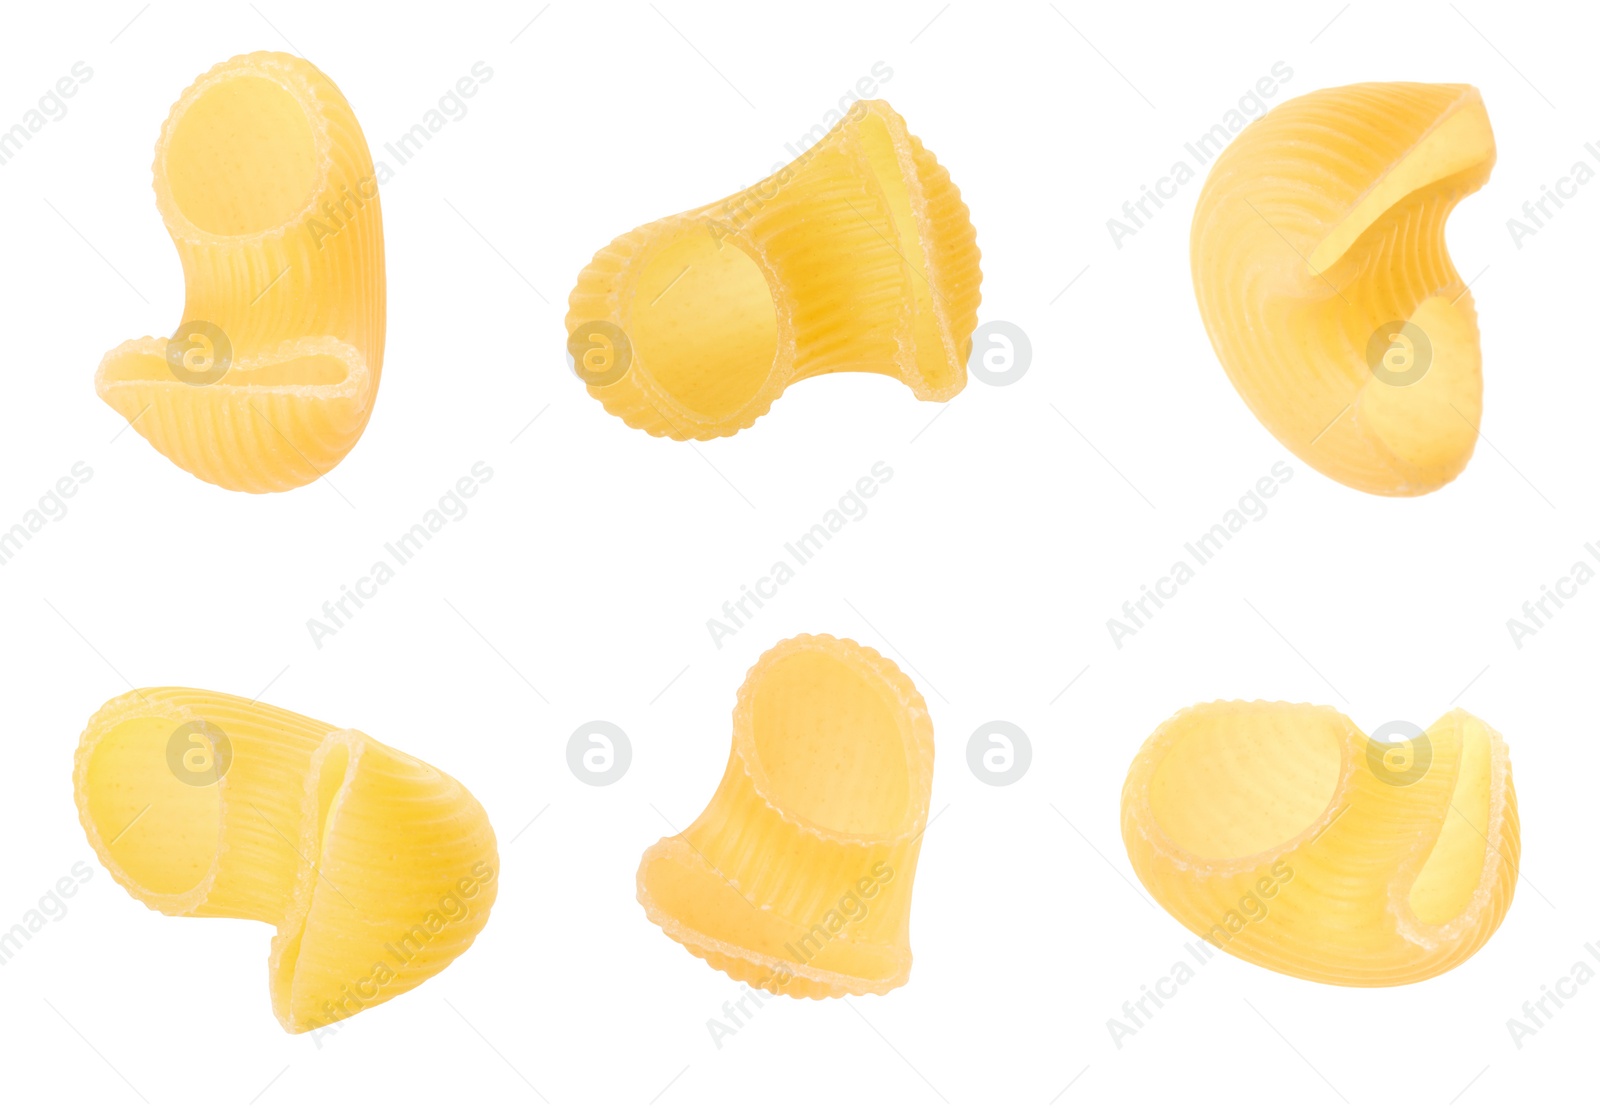 Image of Raw horns pasta isolated on white, set